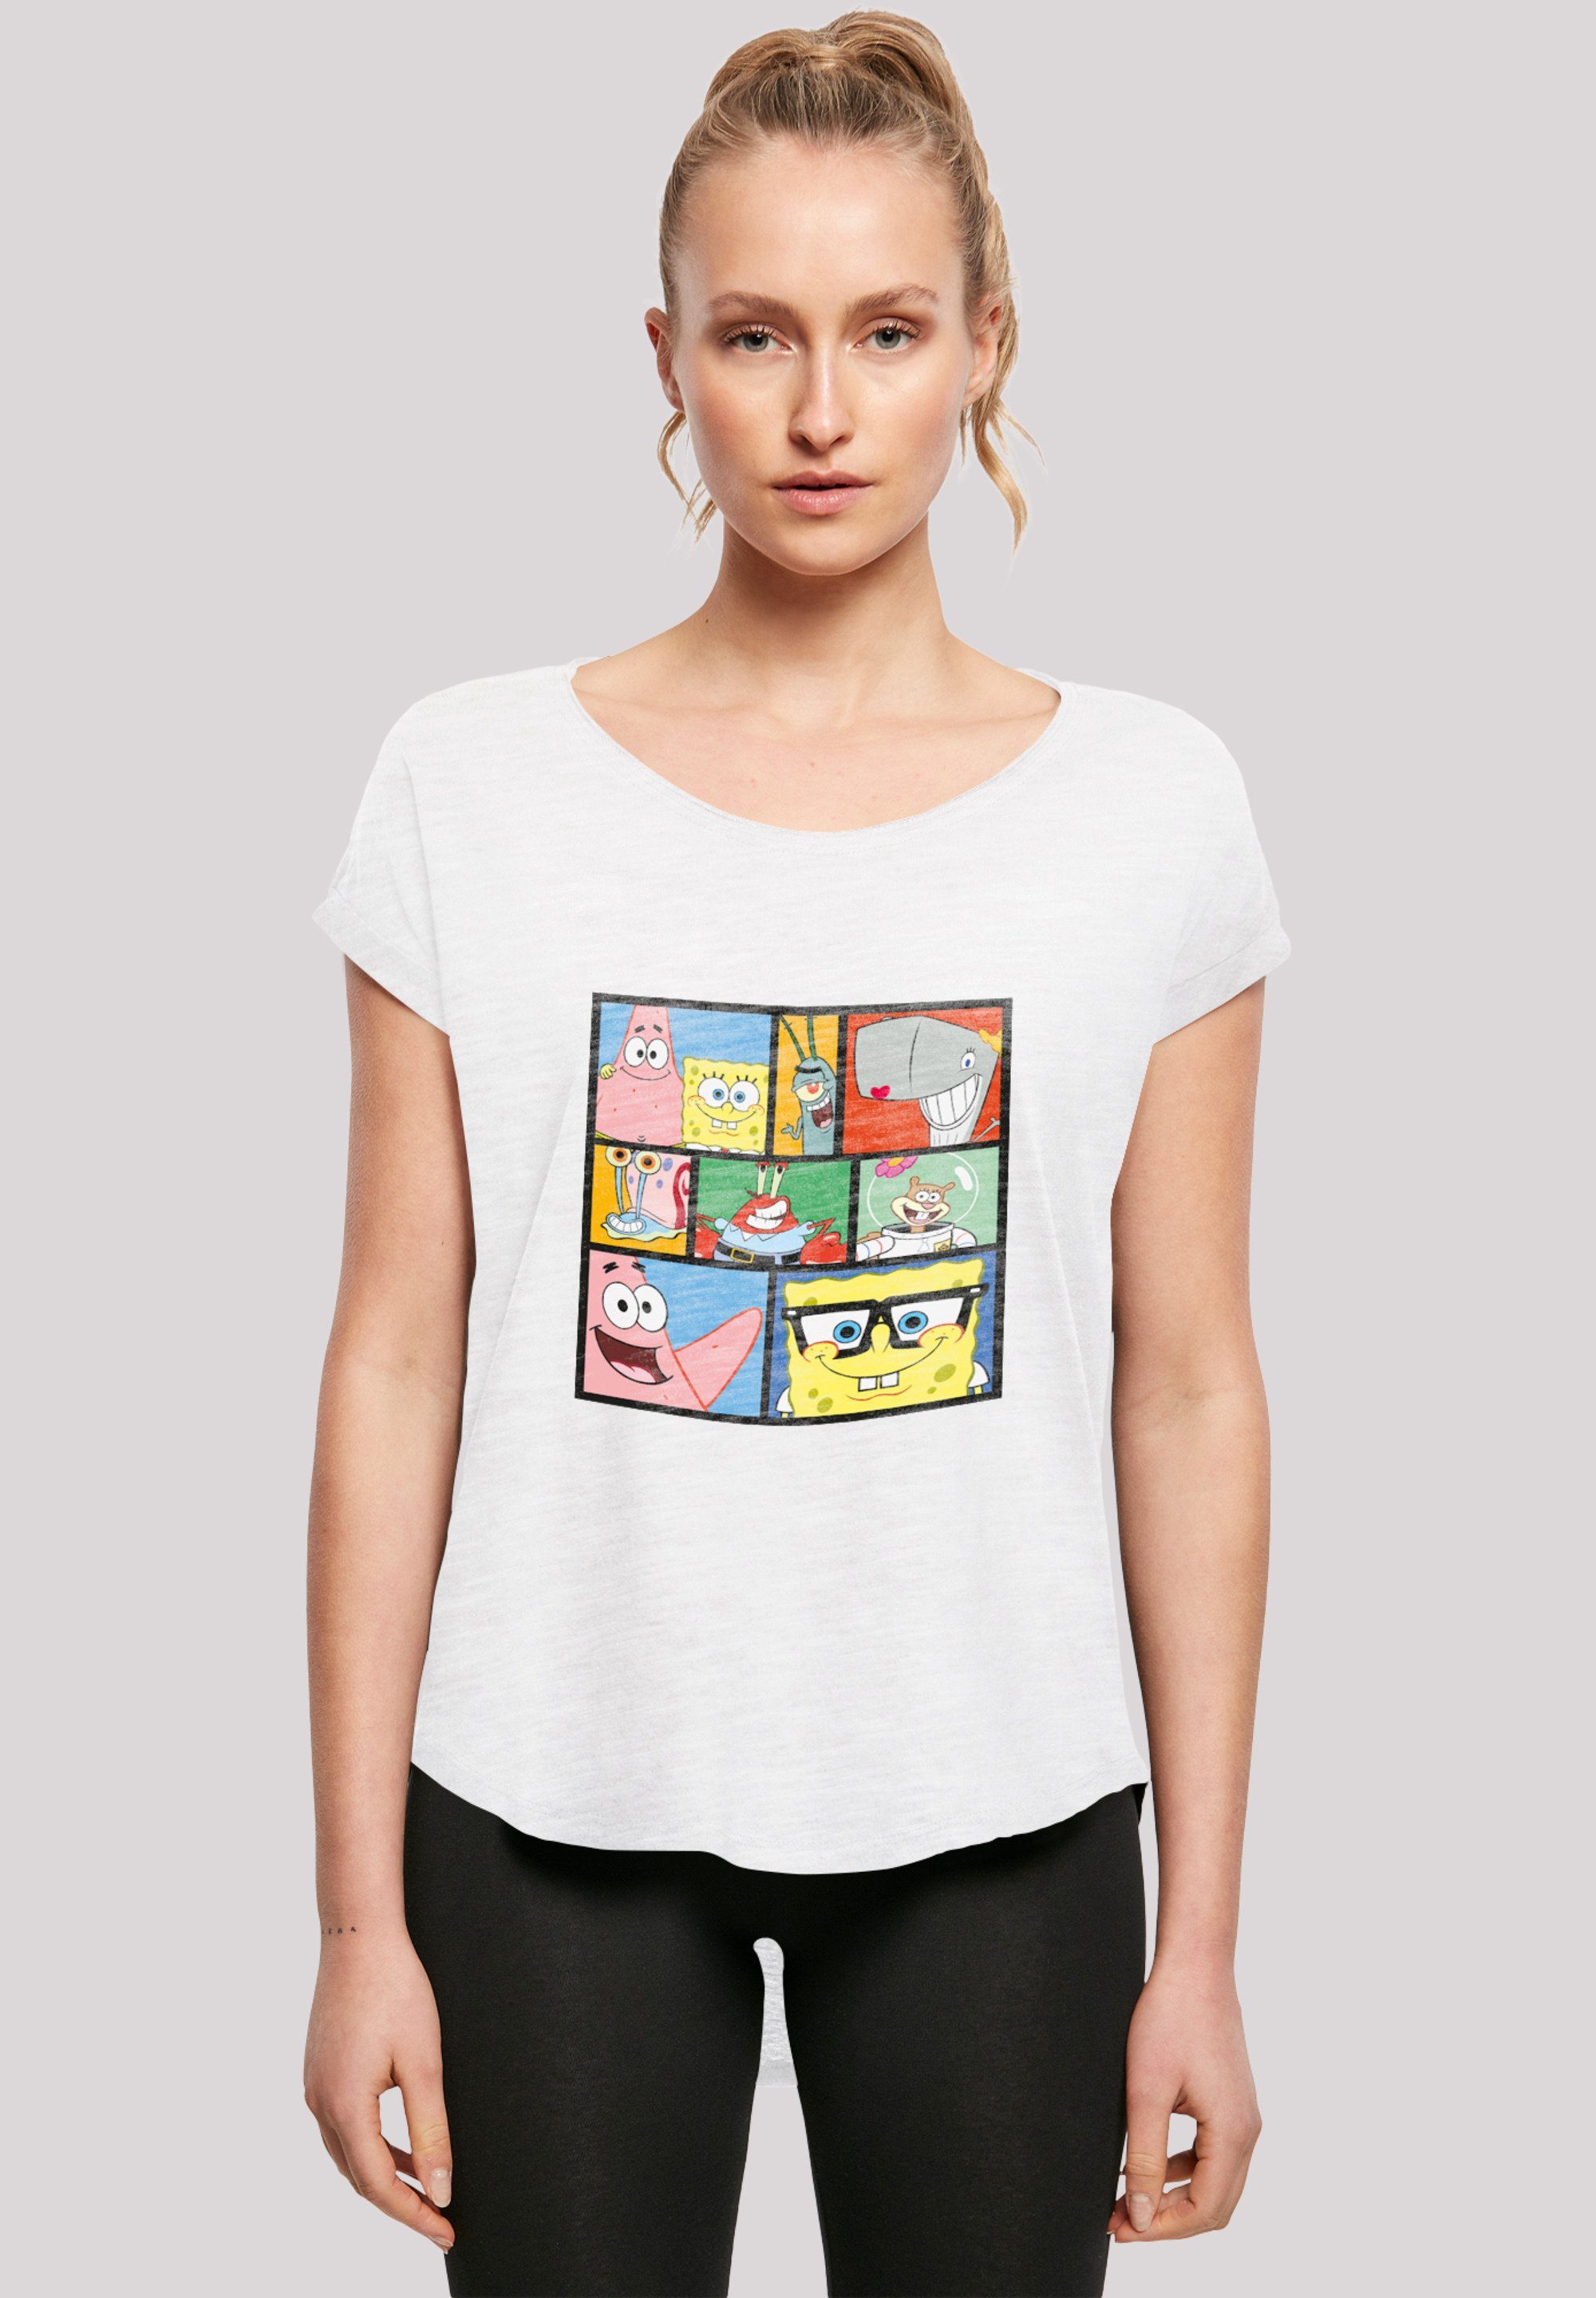 F4NT4STIC T-Shirt 'Spongebob Schwammkopf Collage' Print weiß